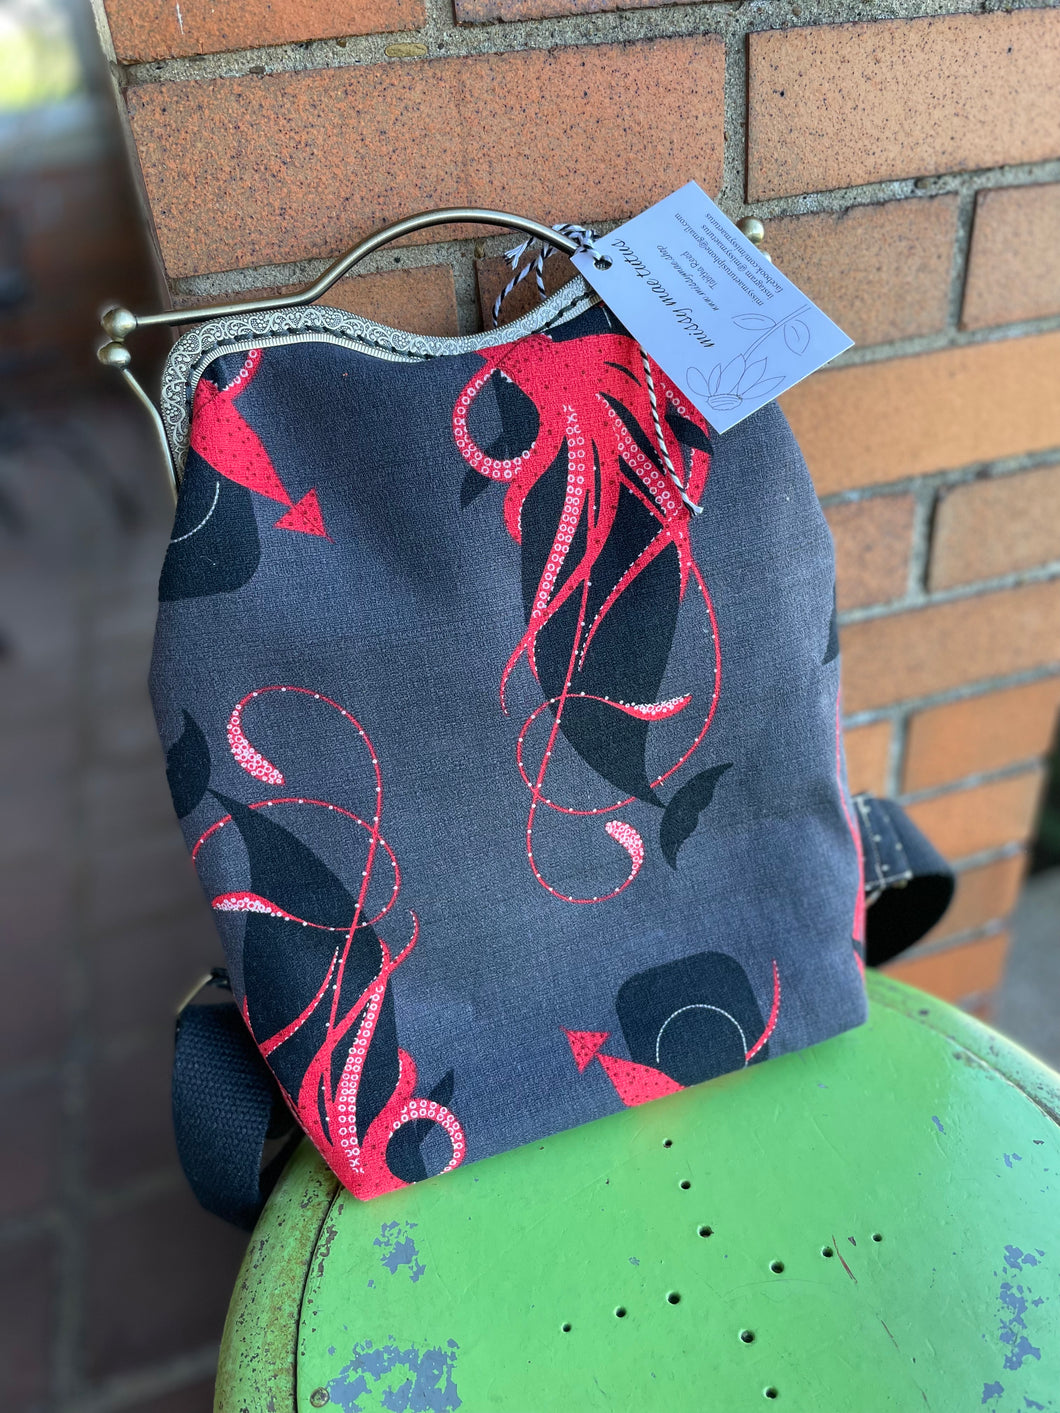 Squid + Whale Charley Harper Fabric Small Clutch Backpack